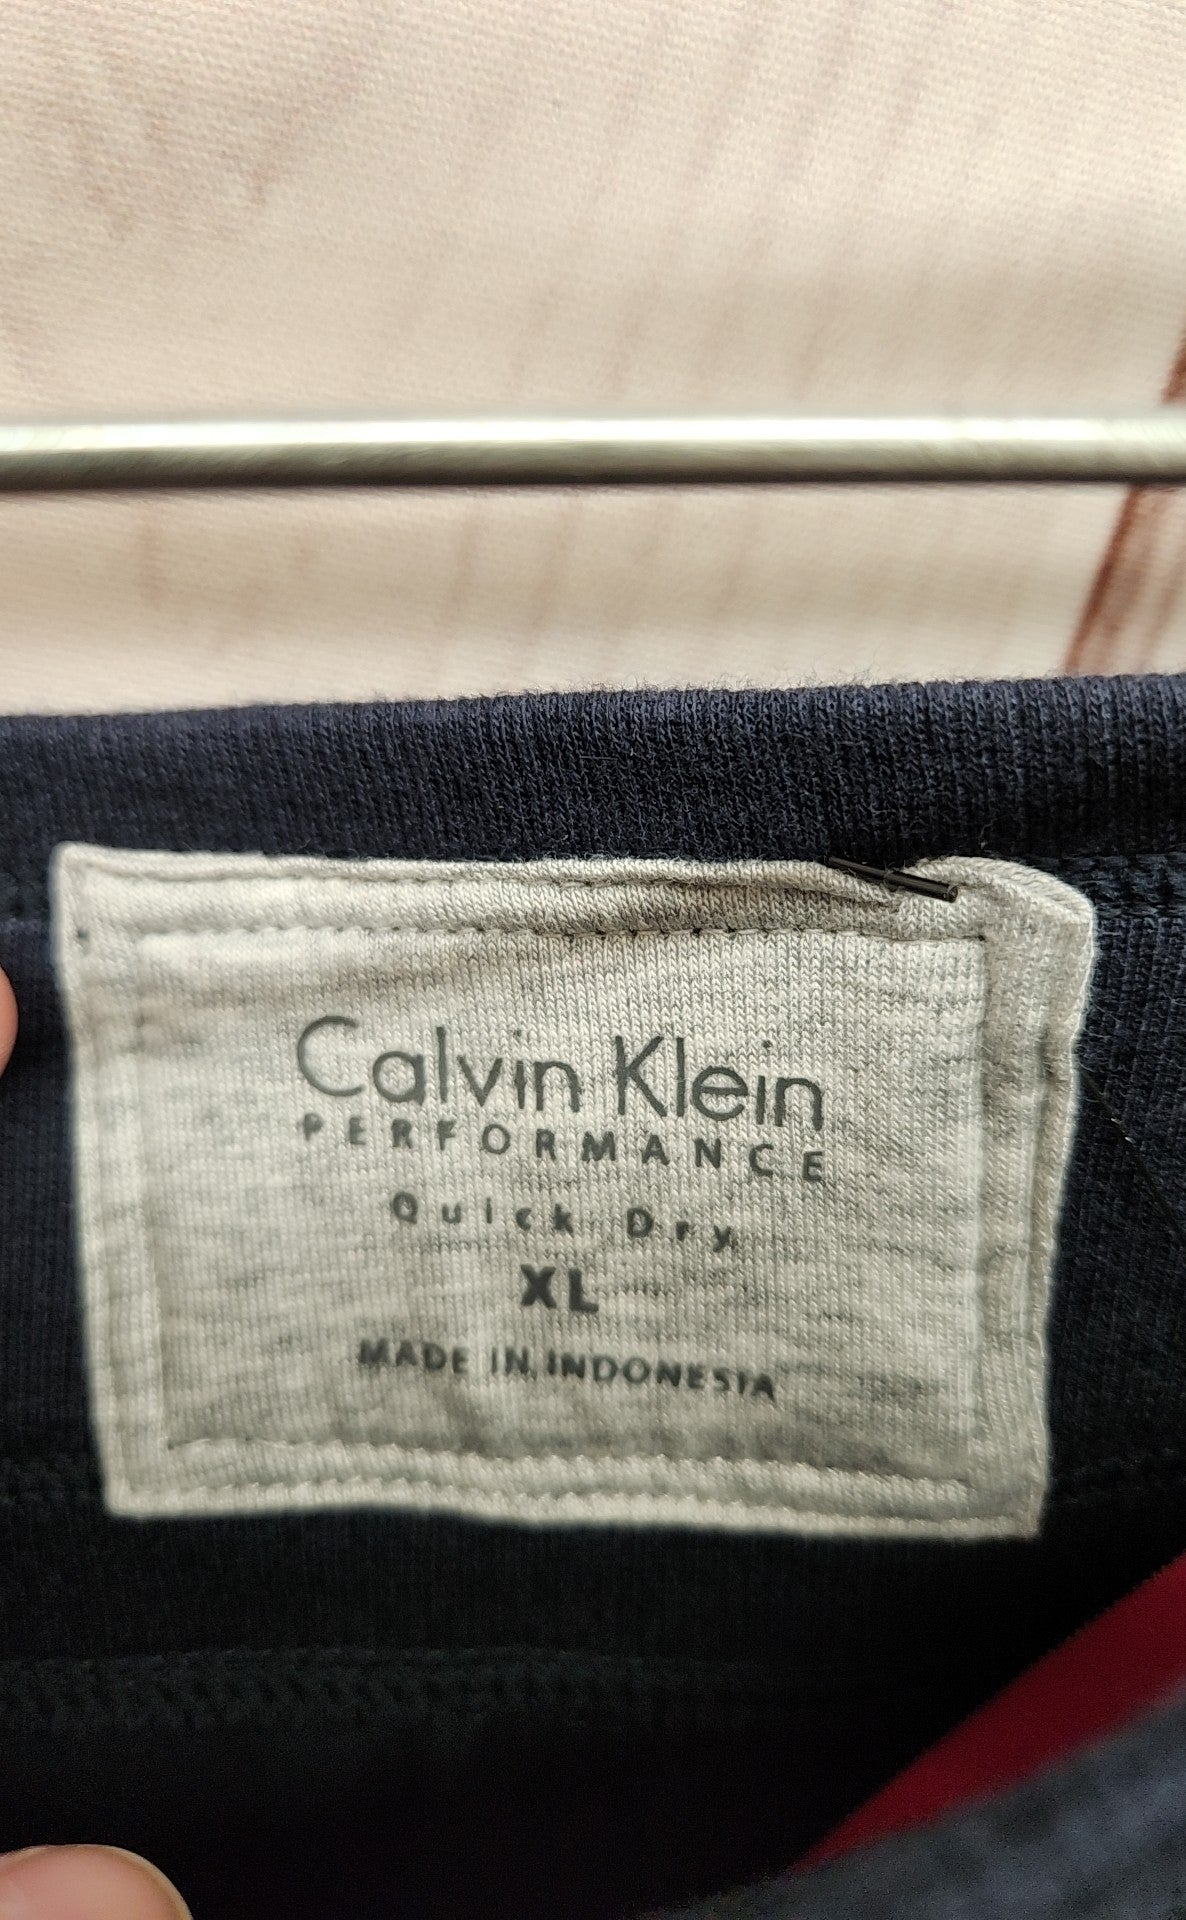 Calvin Klein Women's Size XL Navy Skirt